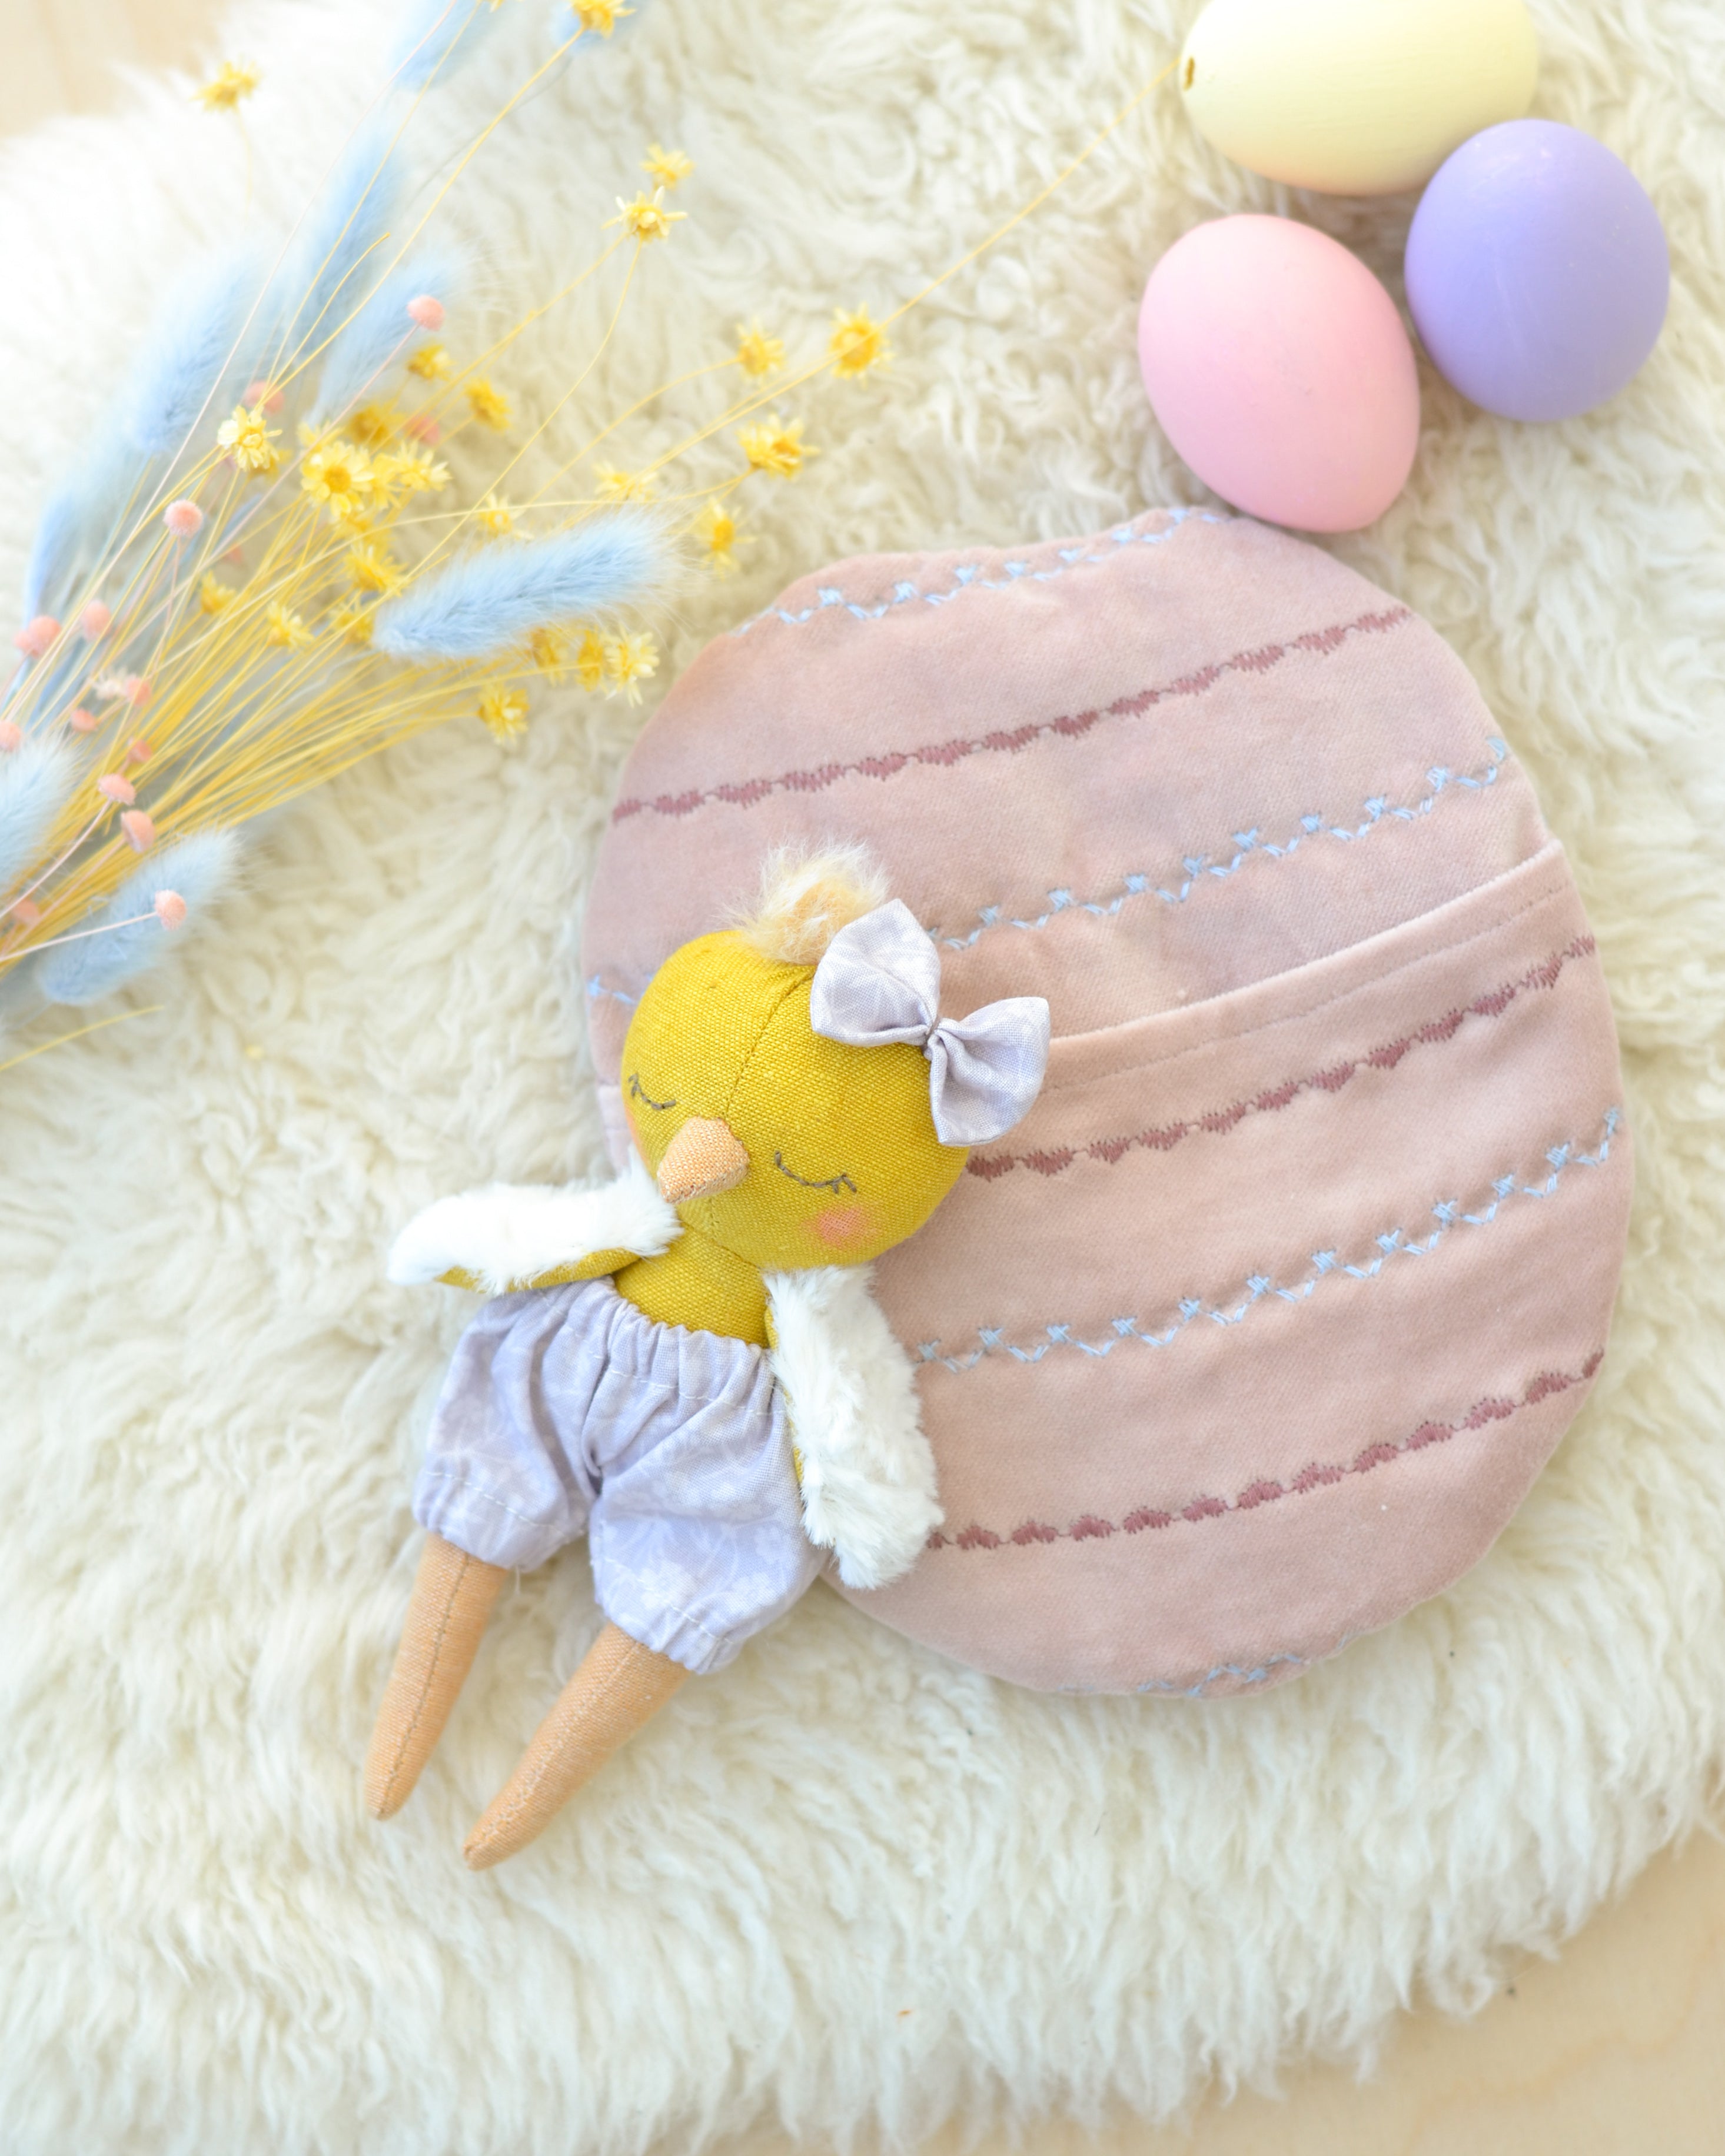 Mini Chick and Easter Egg-shaped Bed cotton velvet